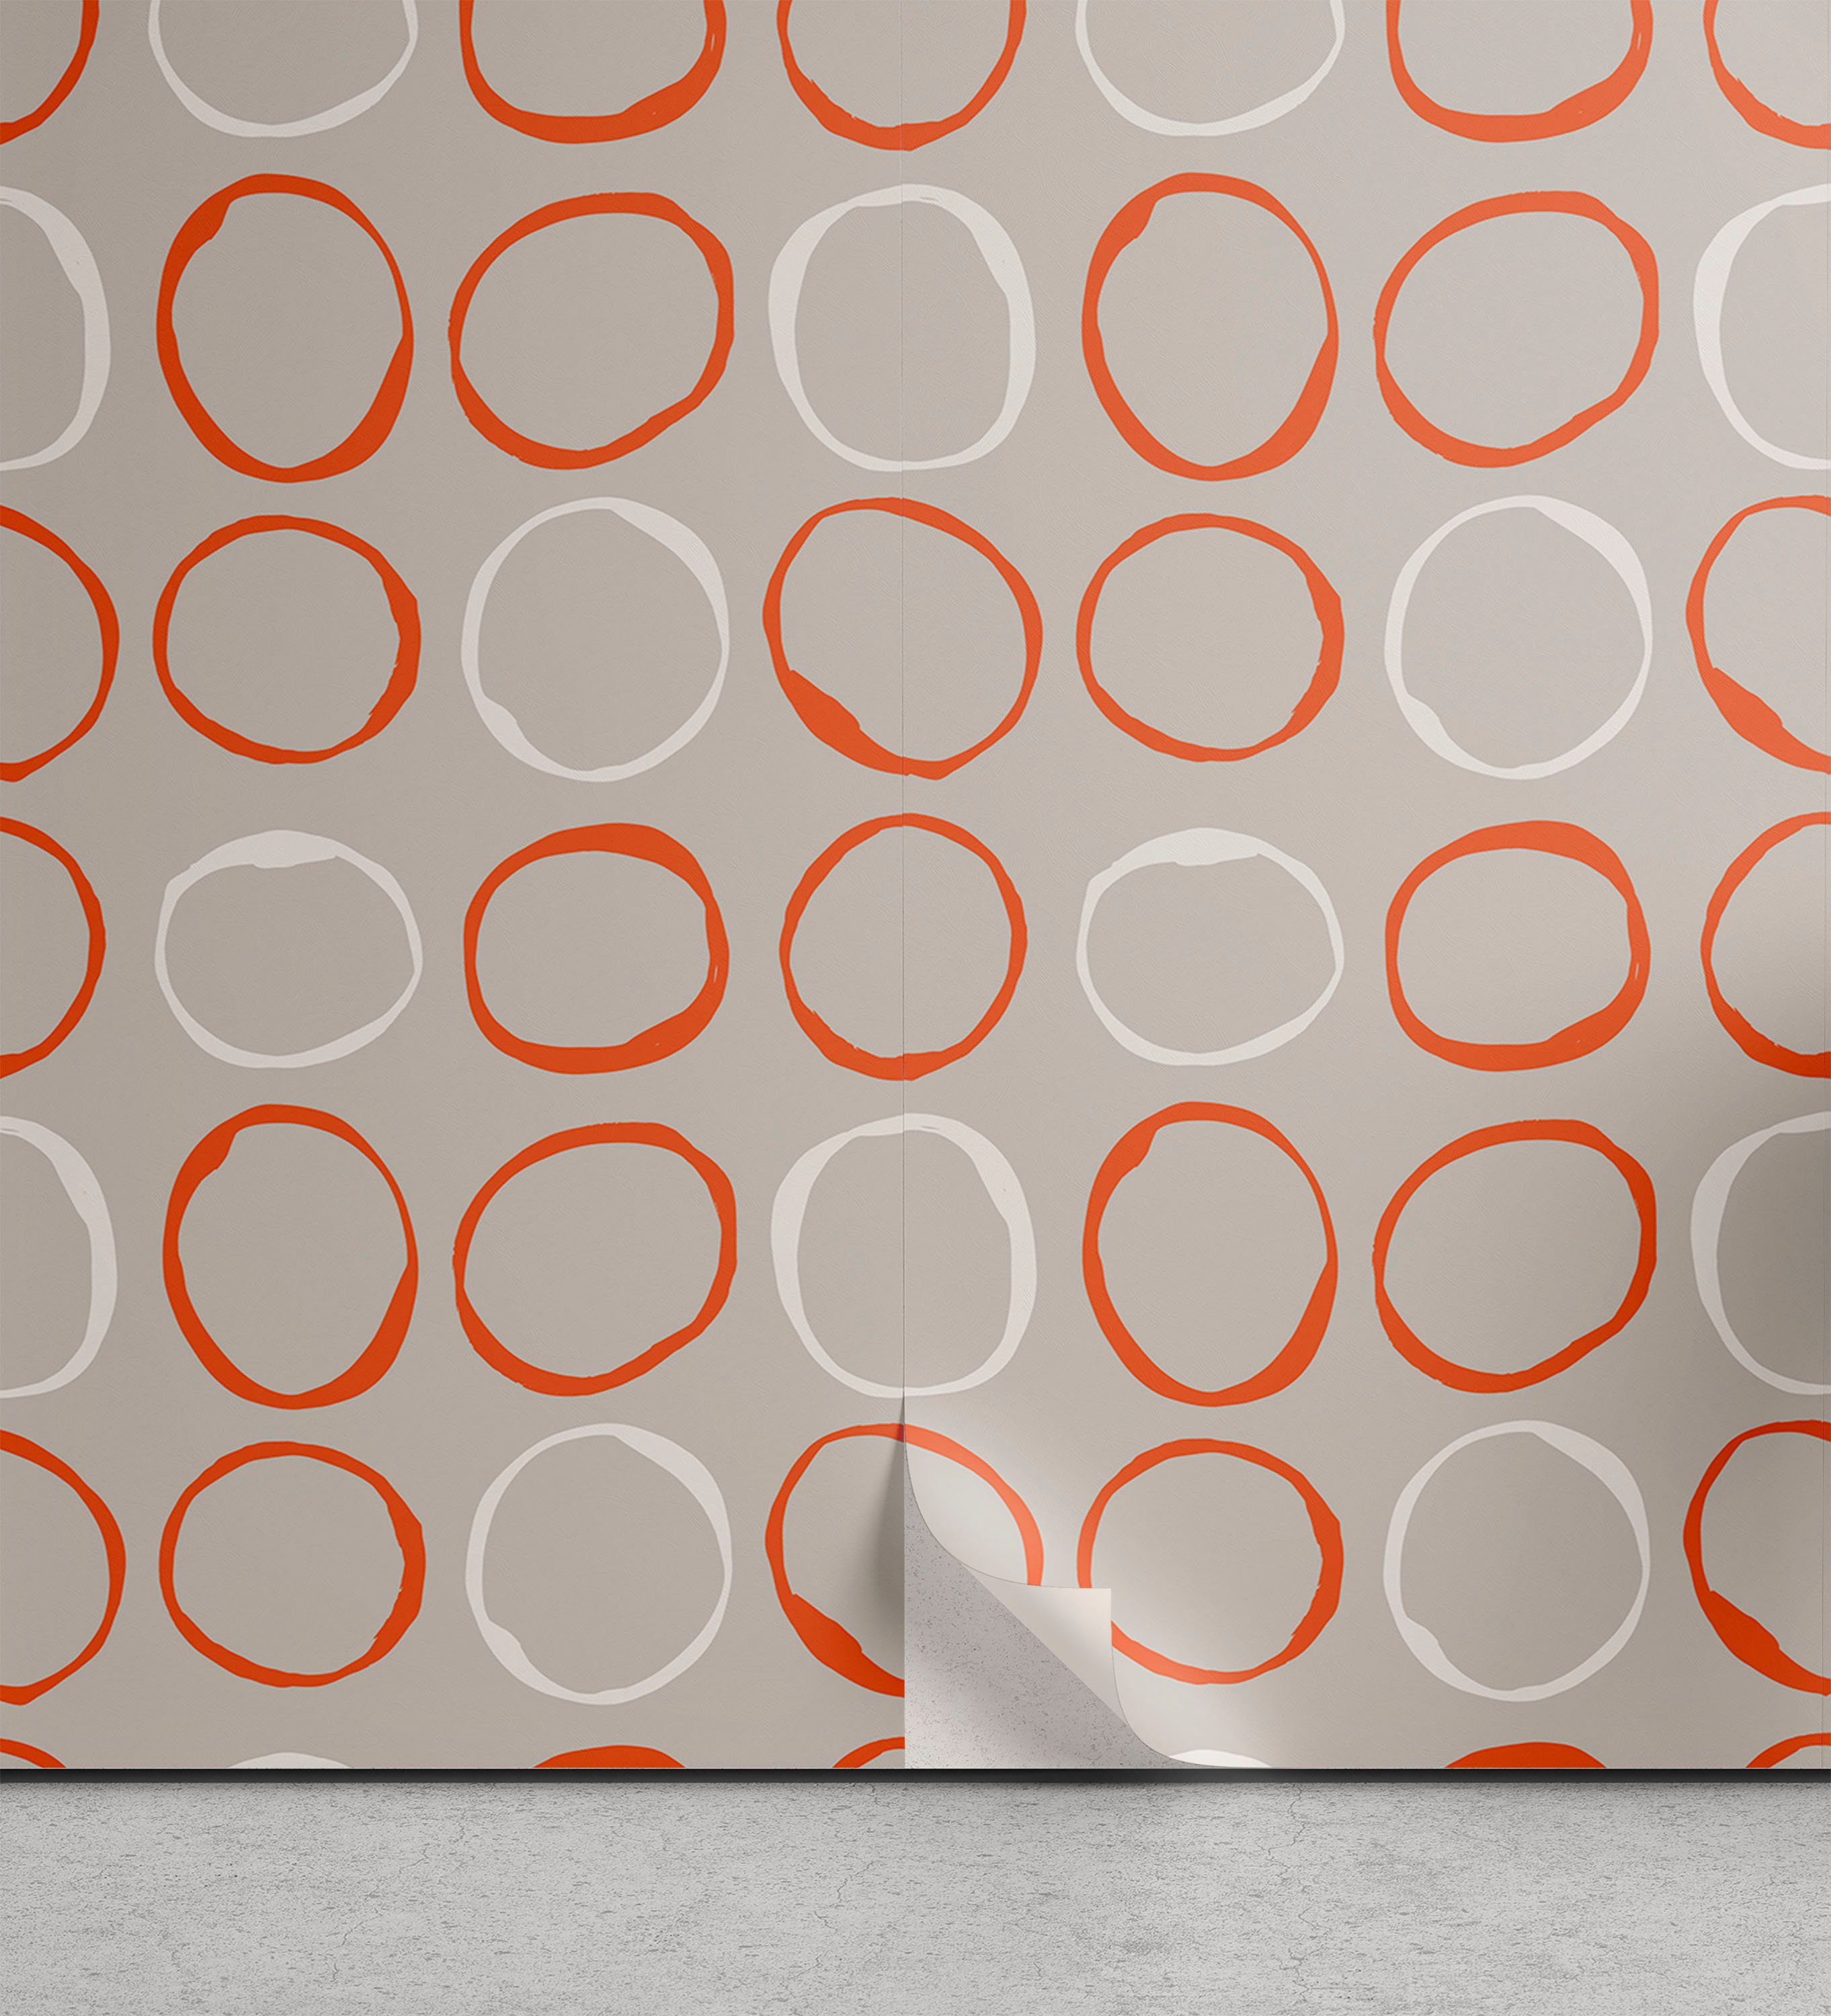 Abakuhaus Vinyltapete selbstklebendes Wohnzimmer Küchenakzent, Orange Einfache Art Sketchy Kreise